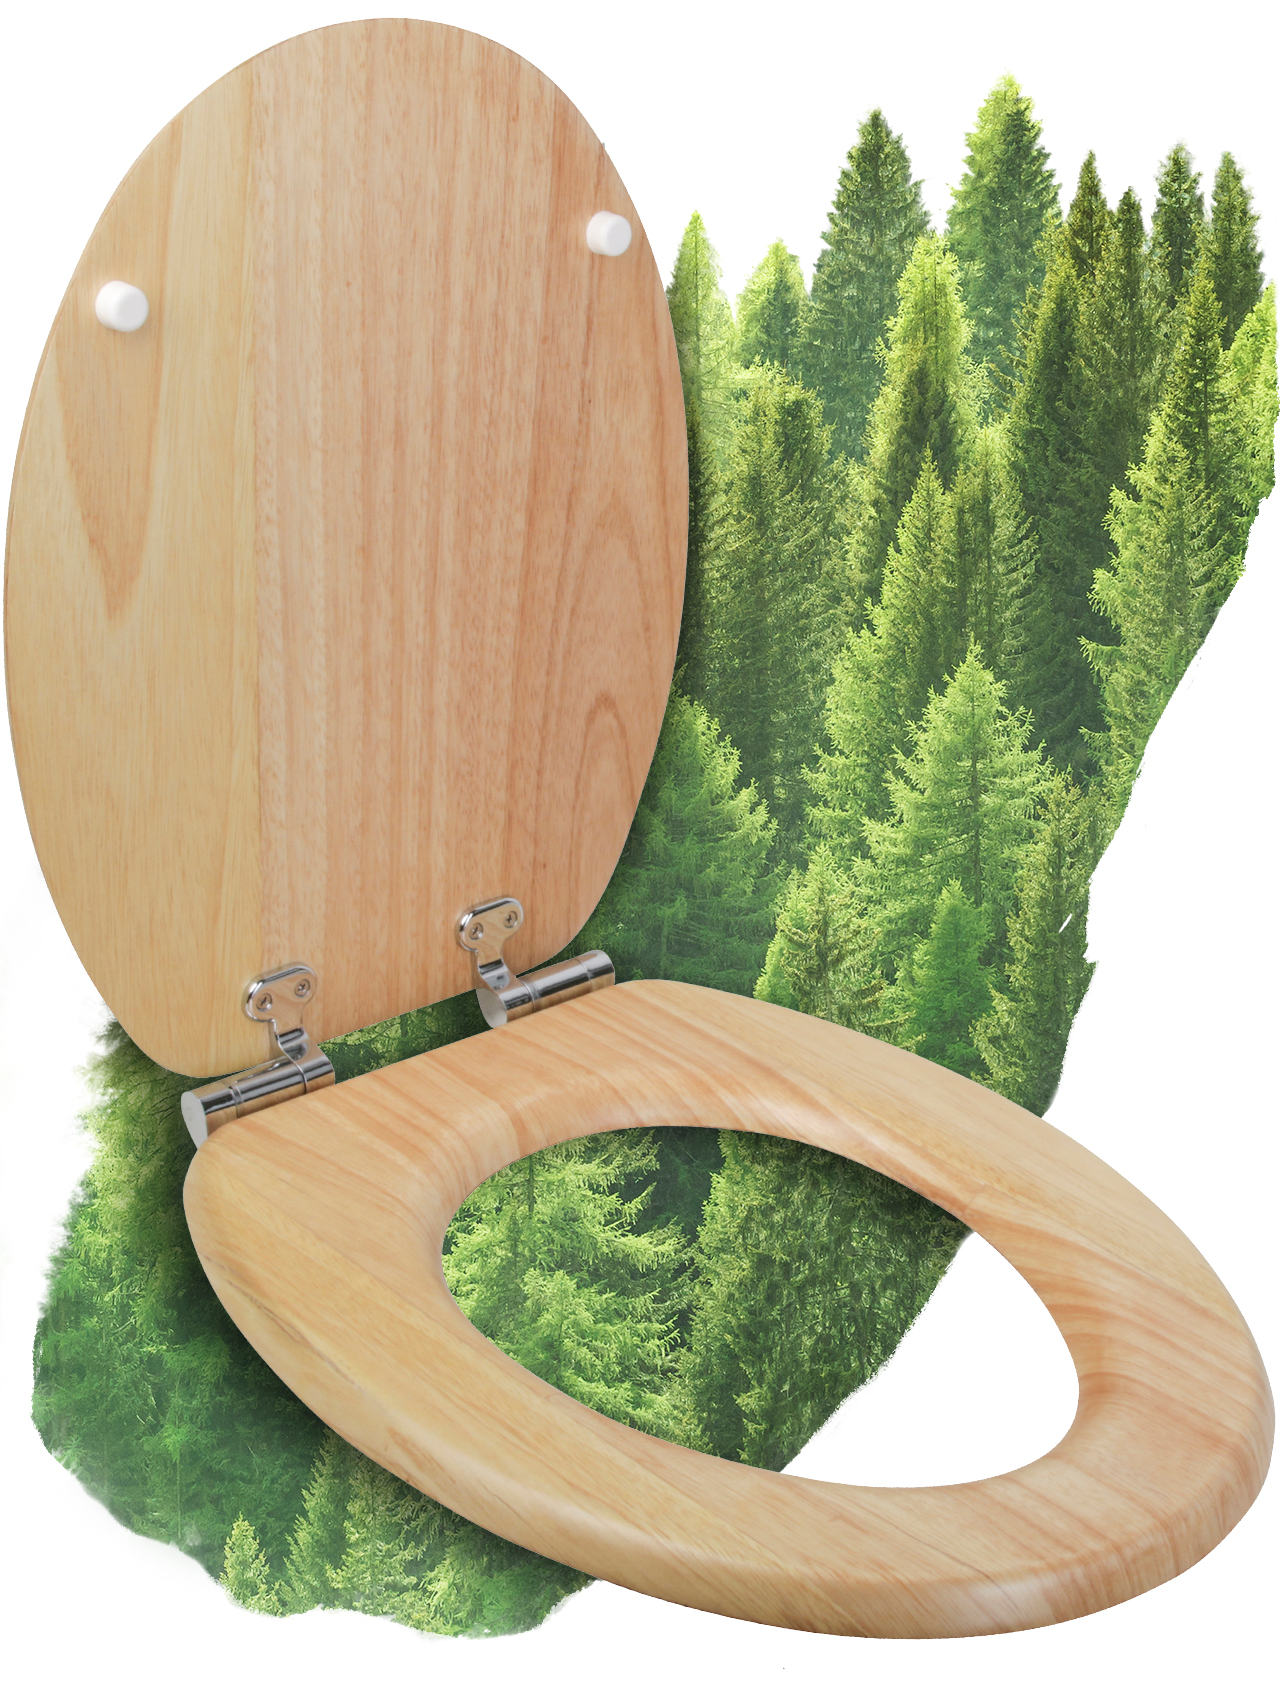 WC-Sitz Holz aus Echtholz-Furnier Kiefer mit Absenkautomatik, Fast-Fix und Edelstahlscharnier, oval